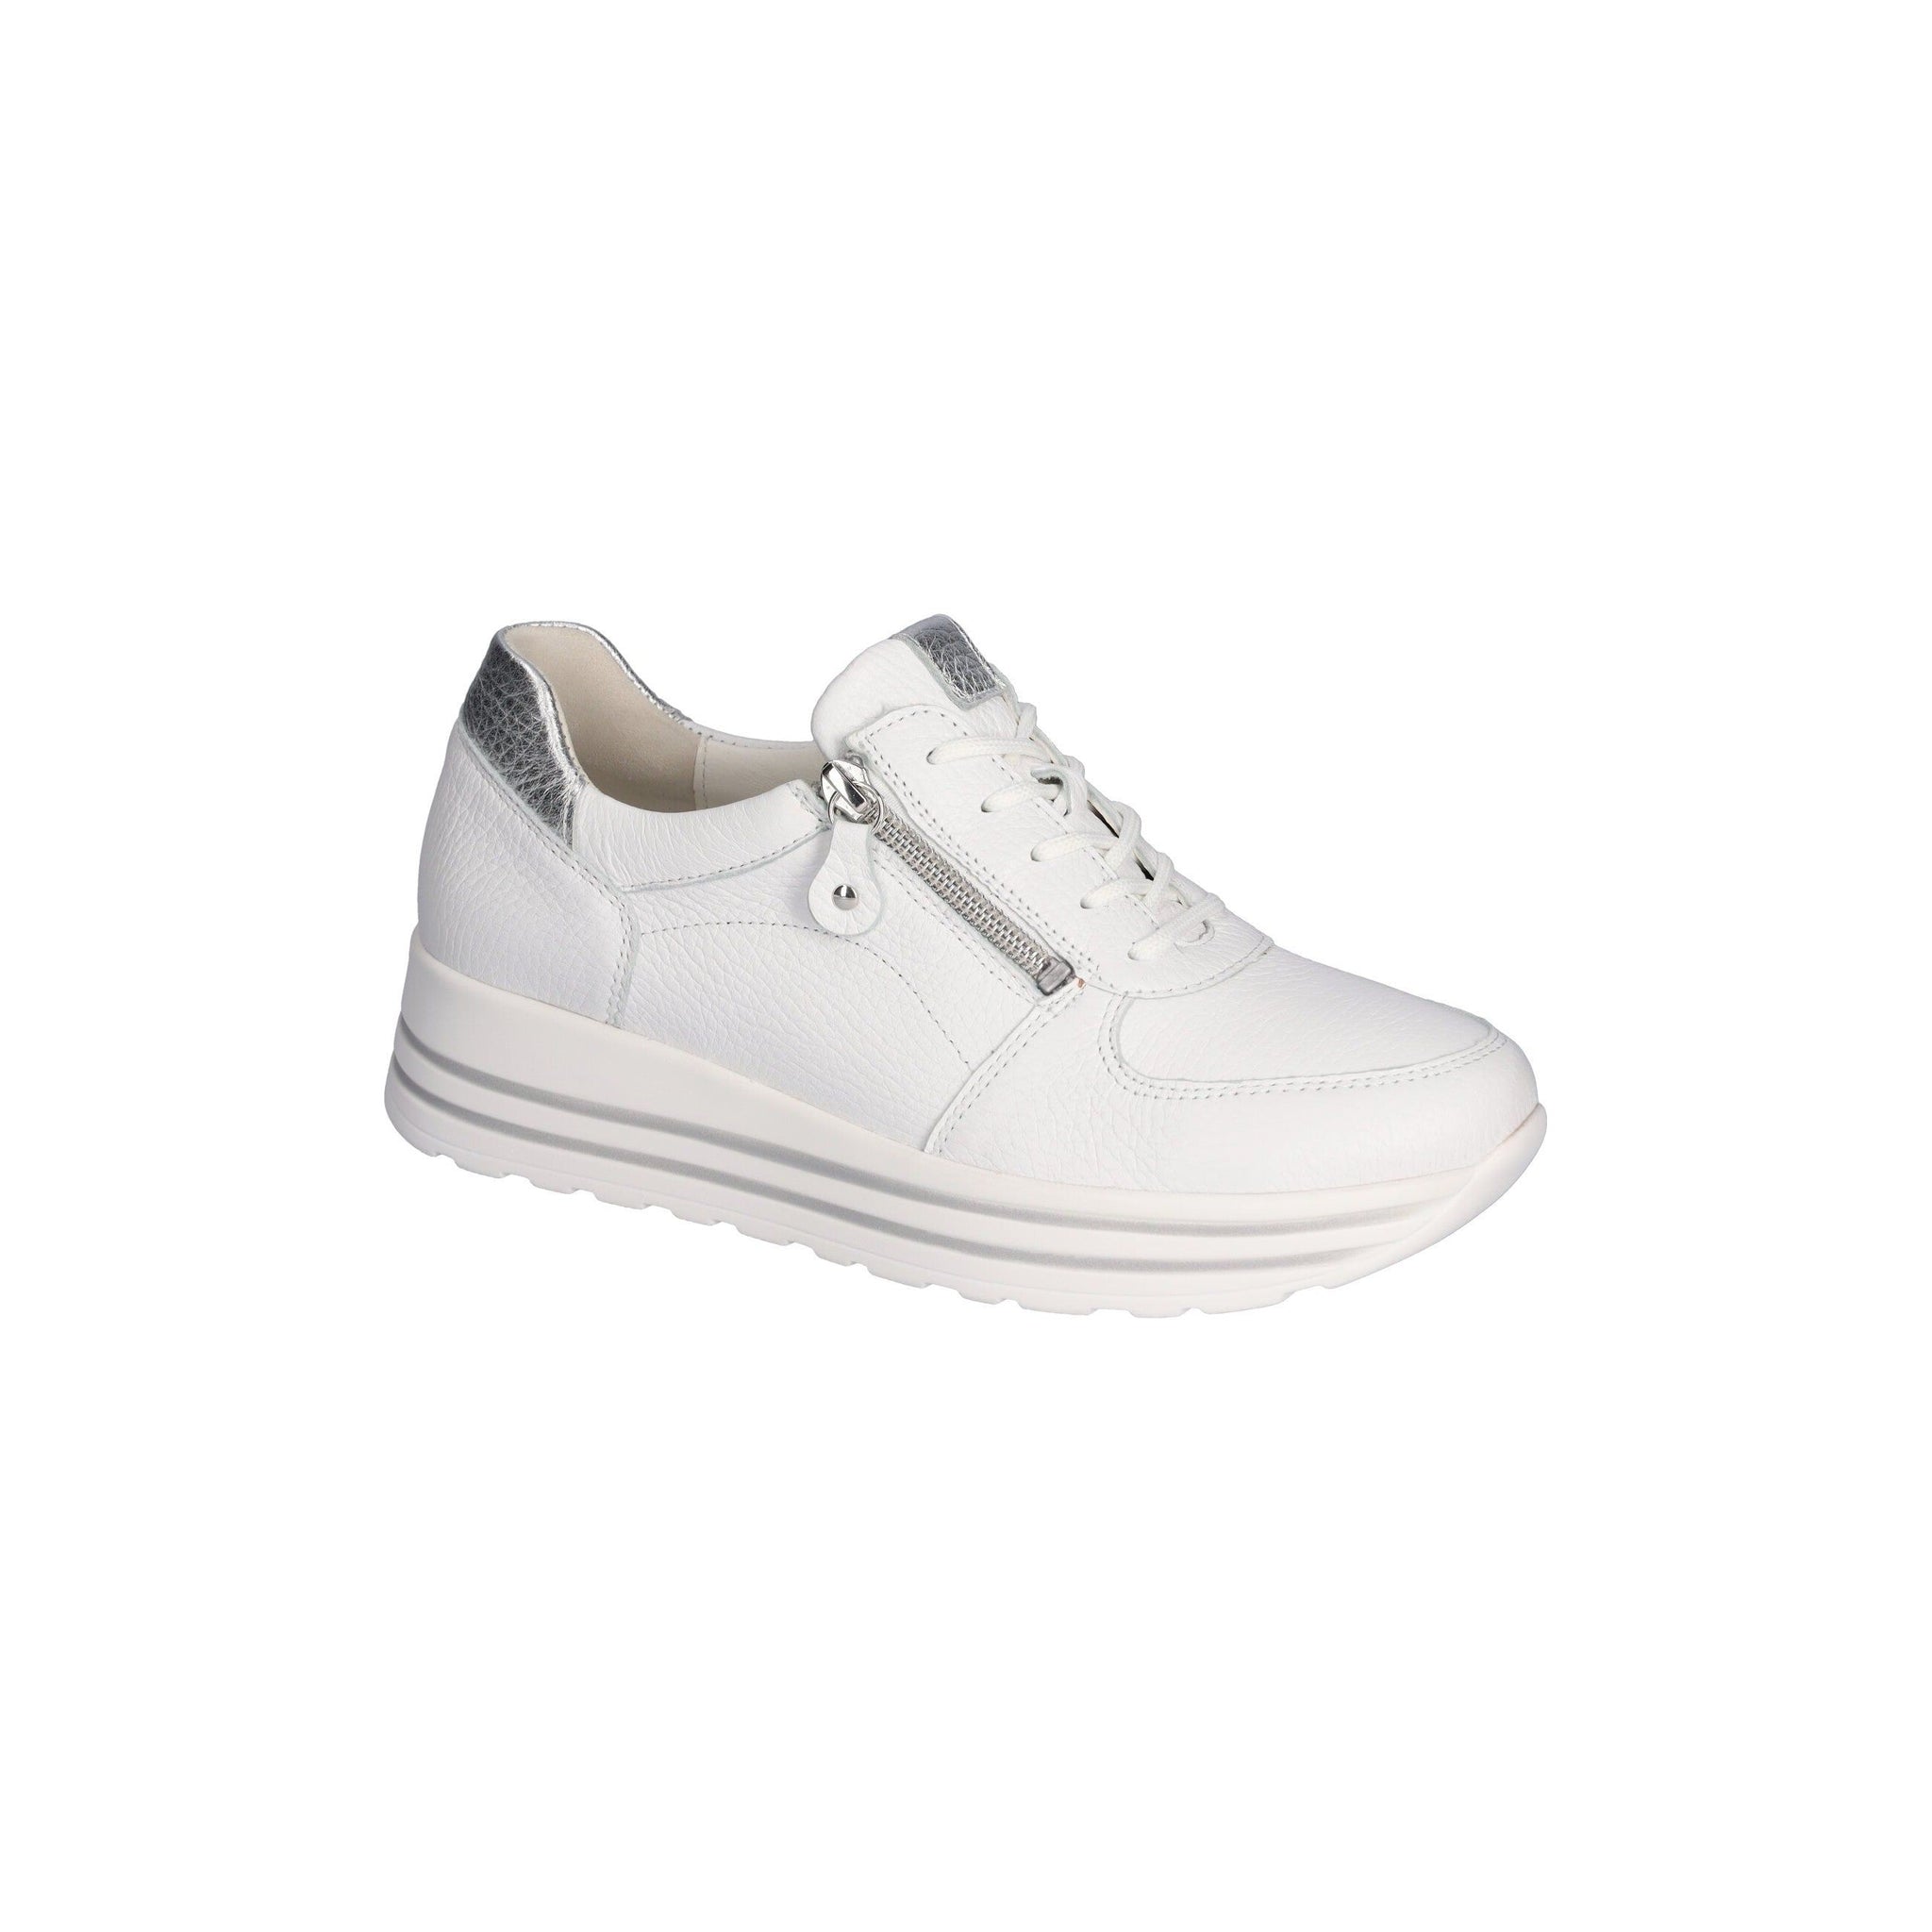 Waldlaufer H-Lana (758009) - Ladies Lace Trainer with Zip in White. Waldlaufer | Wide Fit Shoes | Wisemans | Bantry | West Cork | Munster | Shoe Shop | Ireland